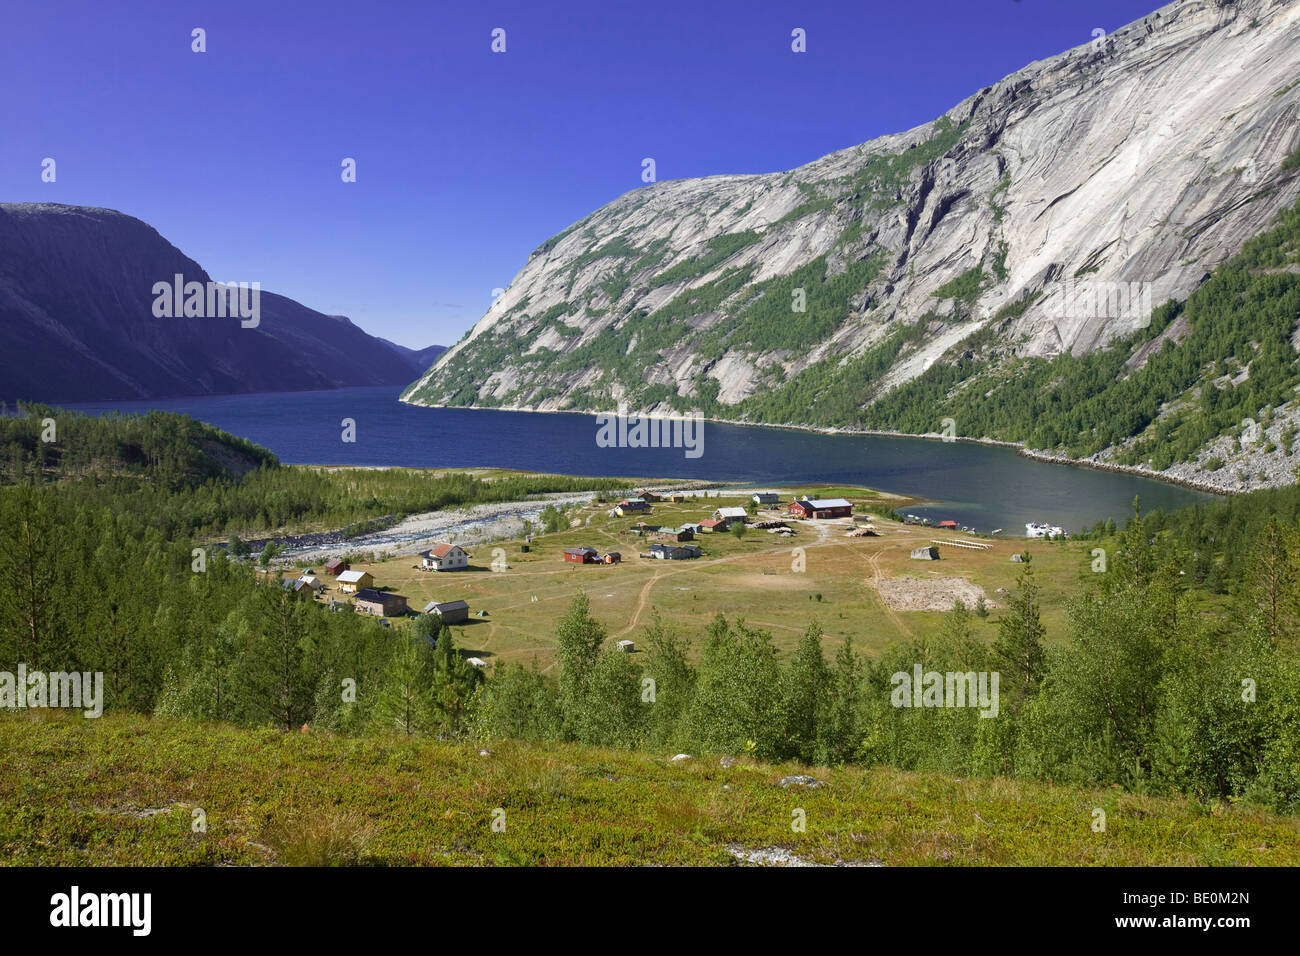 Sami village Hellmobotn at Hellmofjorden, Norway, Scandinavia, Europe Stock Photo